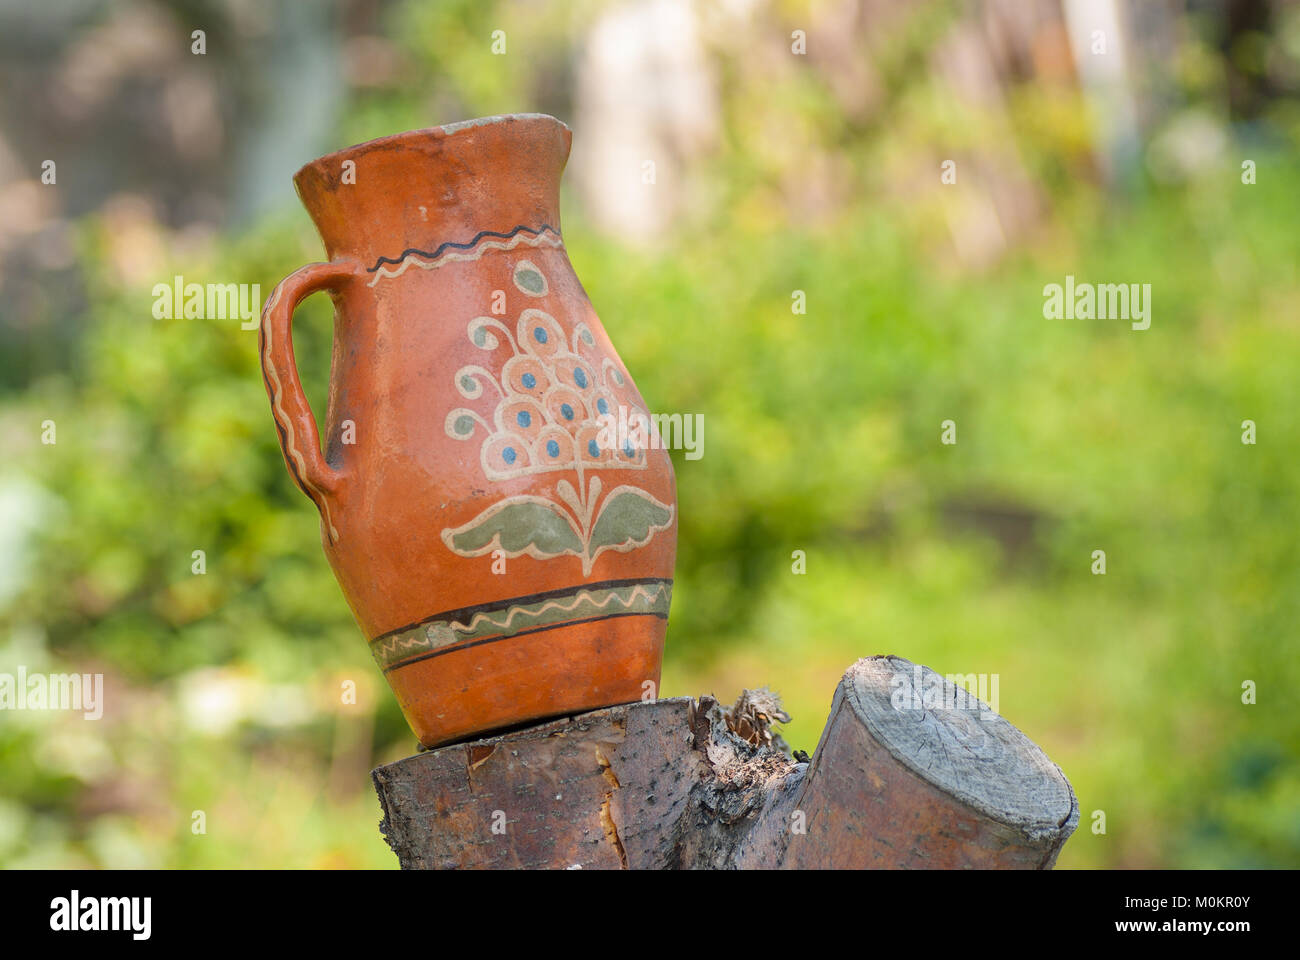 Ancient Ukrainian clay pot standing on a cut tree in summer garden Stock Photo